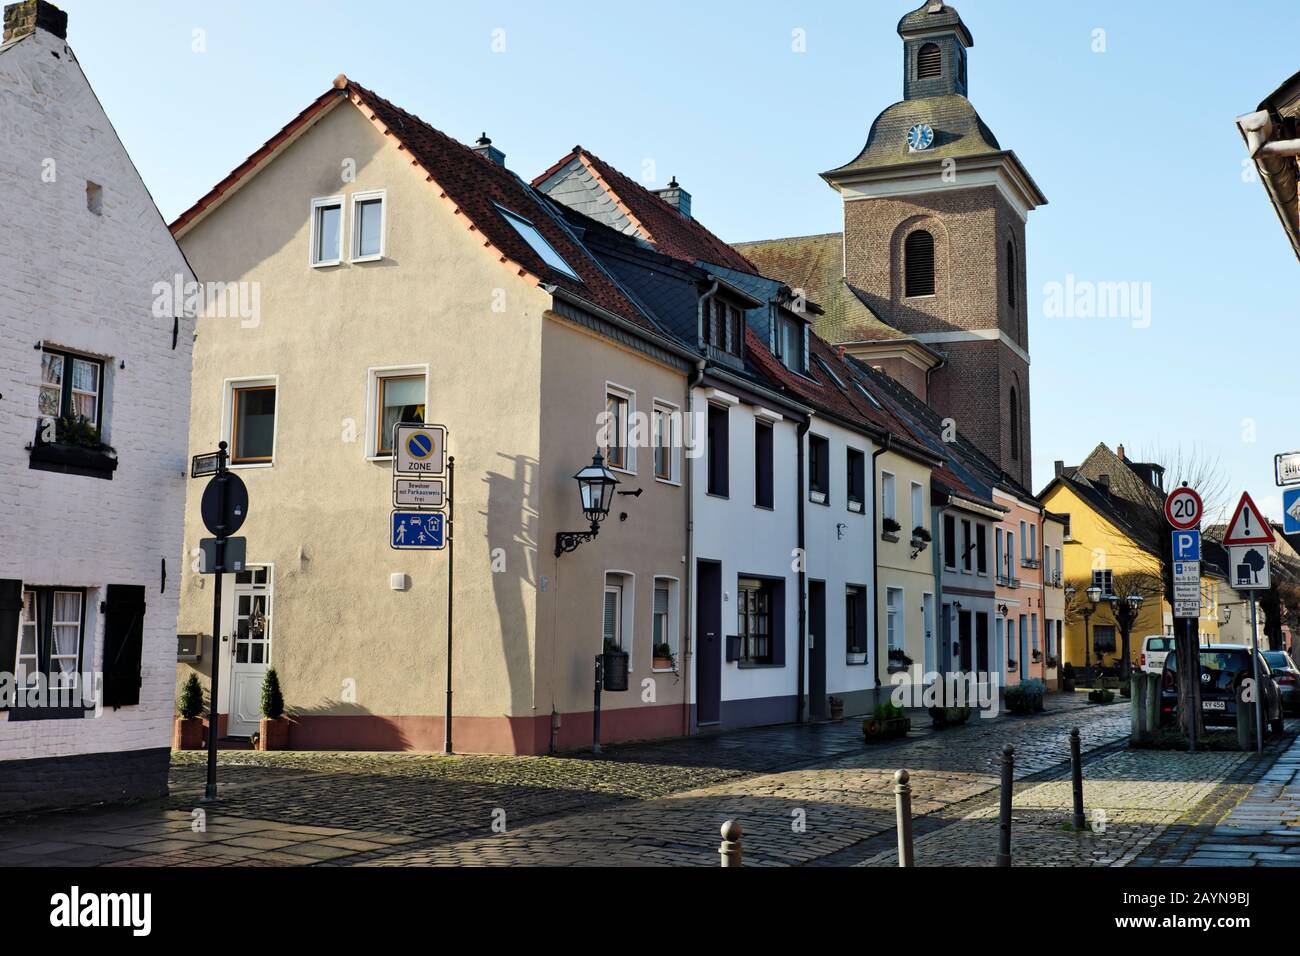 Street scene in historic old town of Krefeld-Linn, NRW Germany. Stock Photo